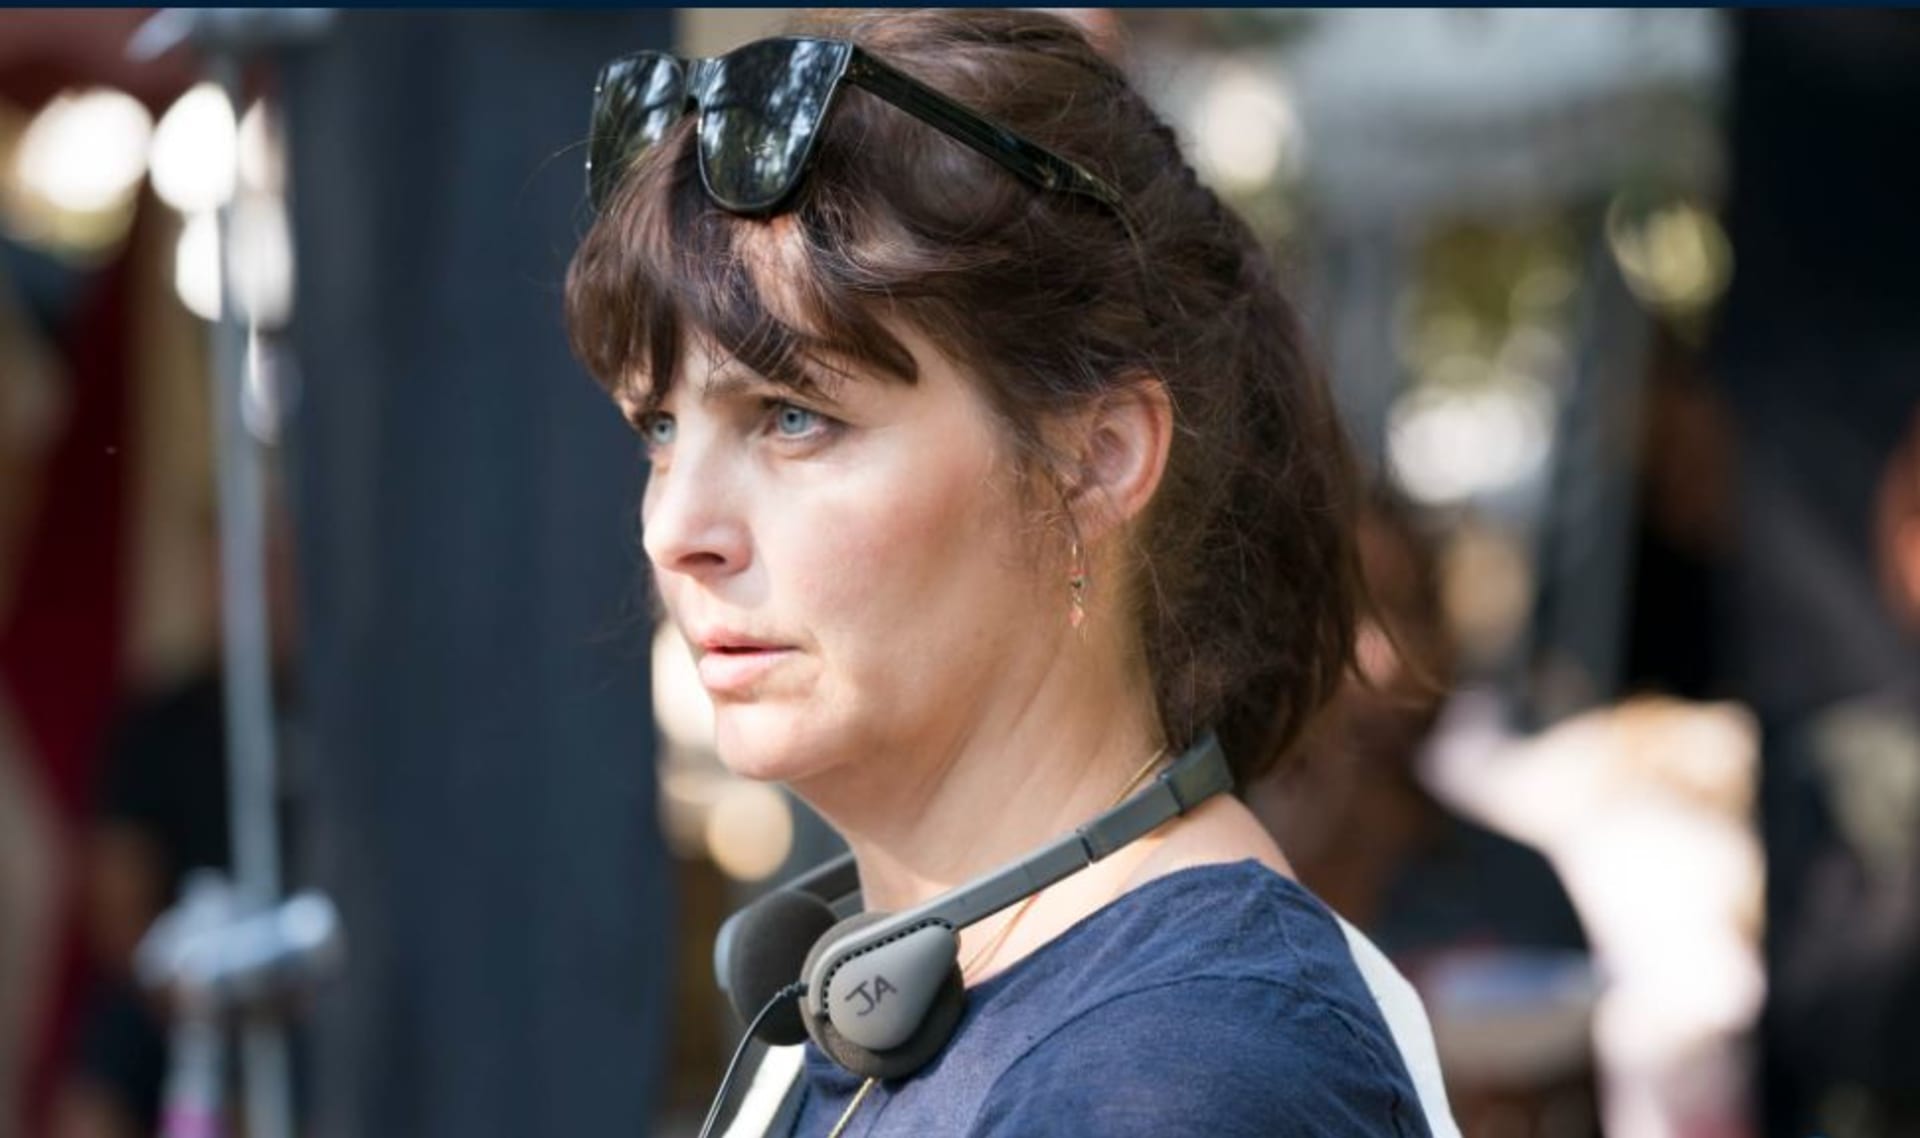 Norská režisérka Cecilie Mosli při natáčení amerického seriálu Chirurgové.